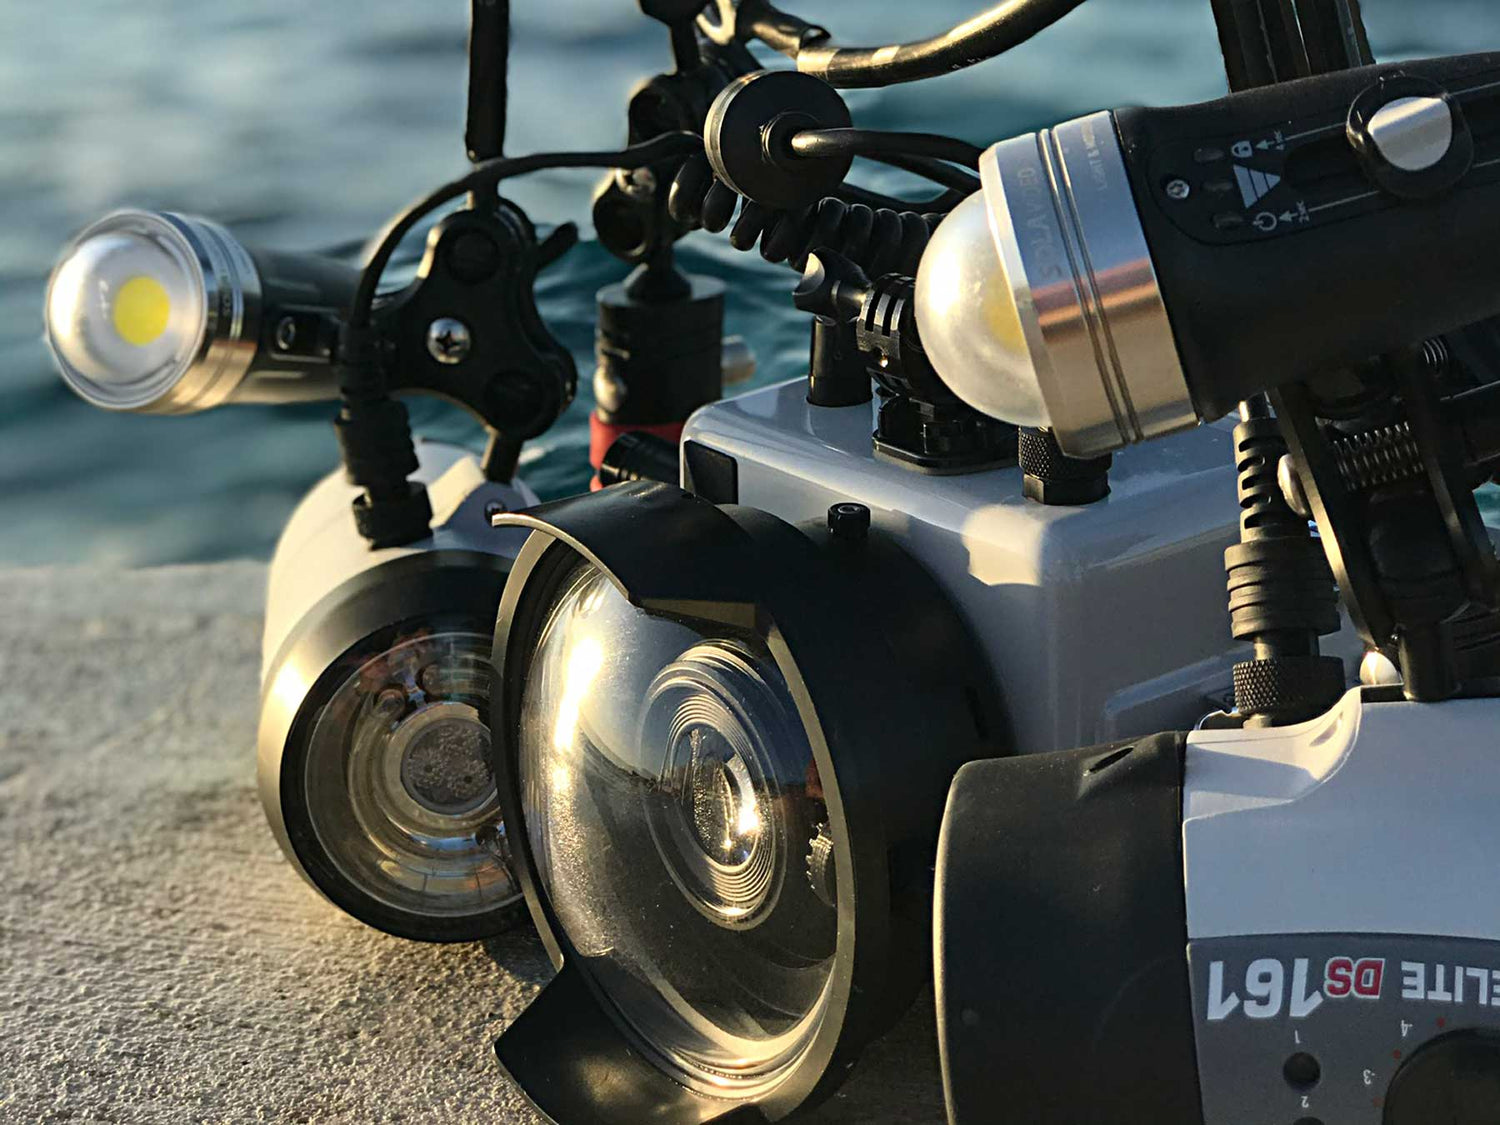 Best Underwater Camera System of 2019